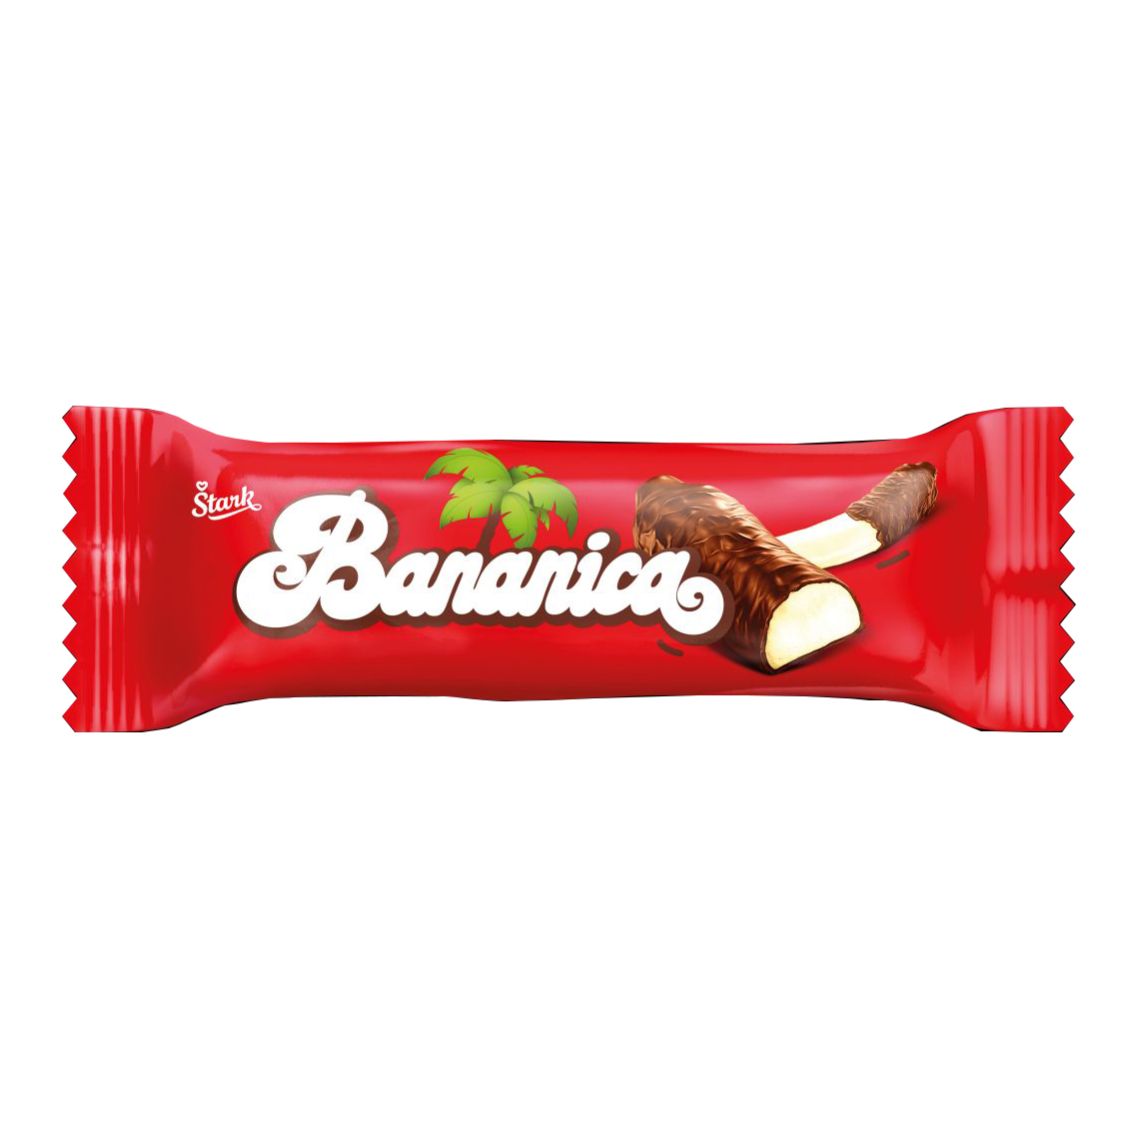 Bananica 25g